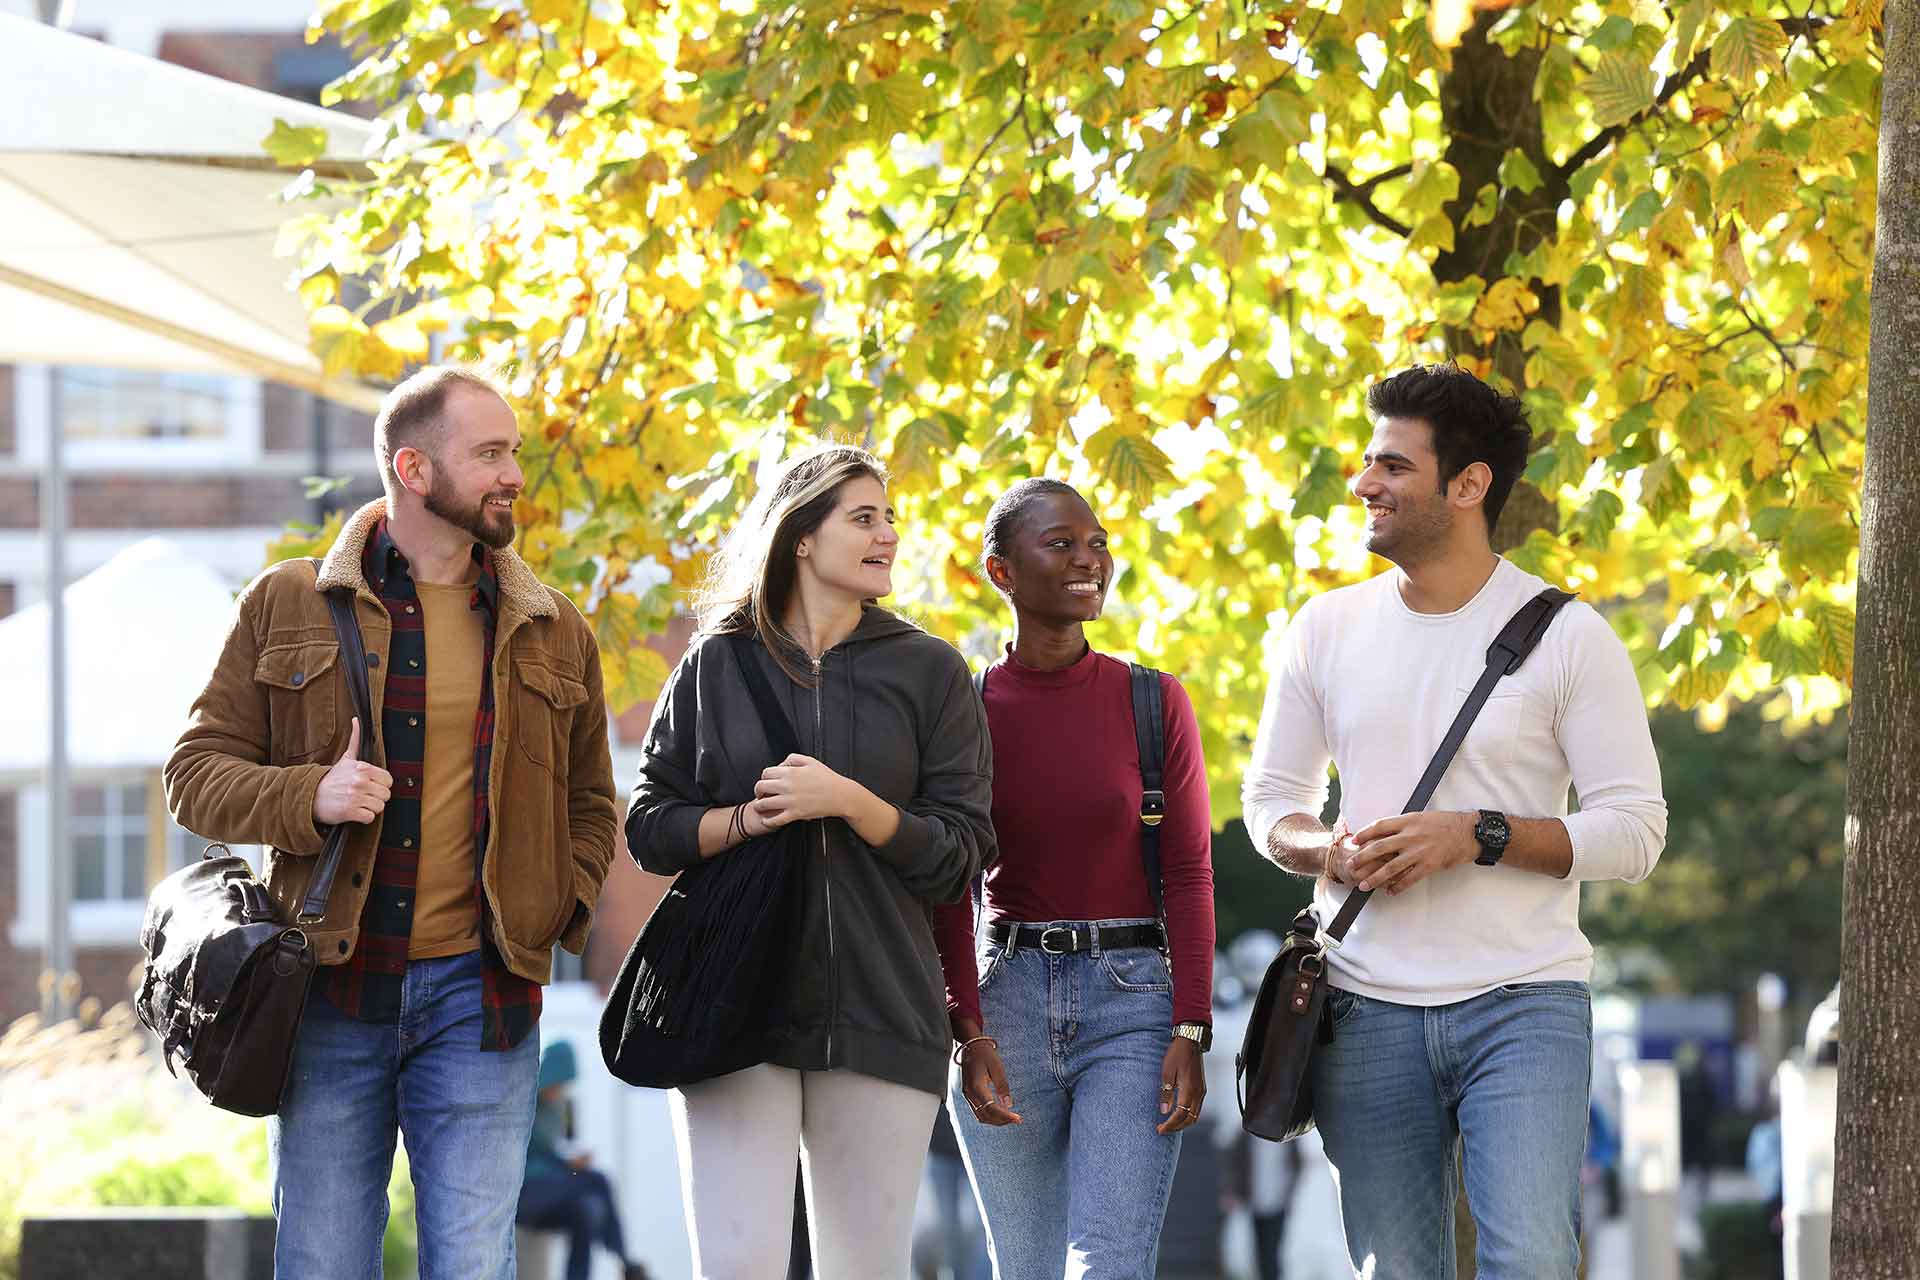 Postgraduate students walking through campus in the autumn